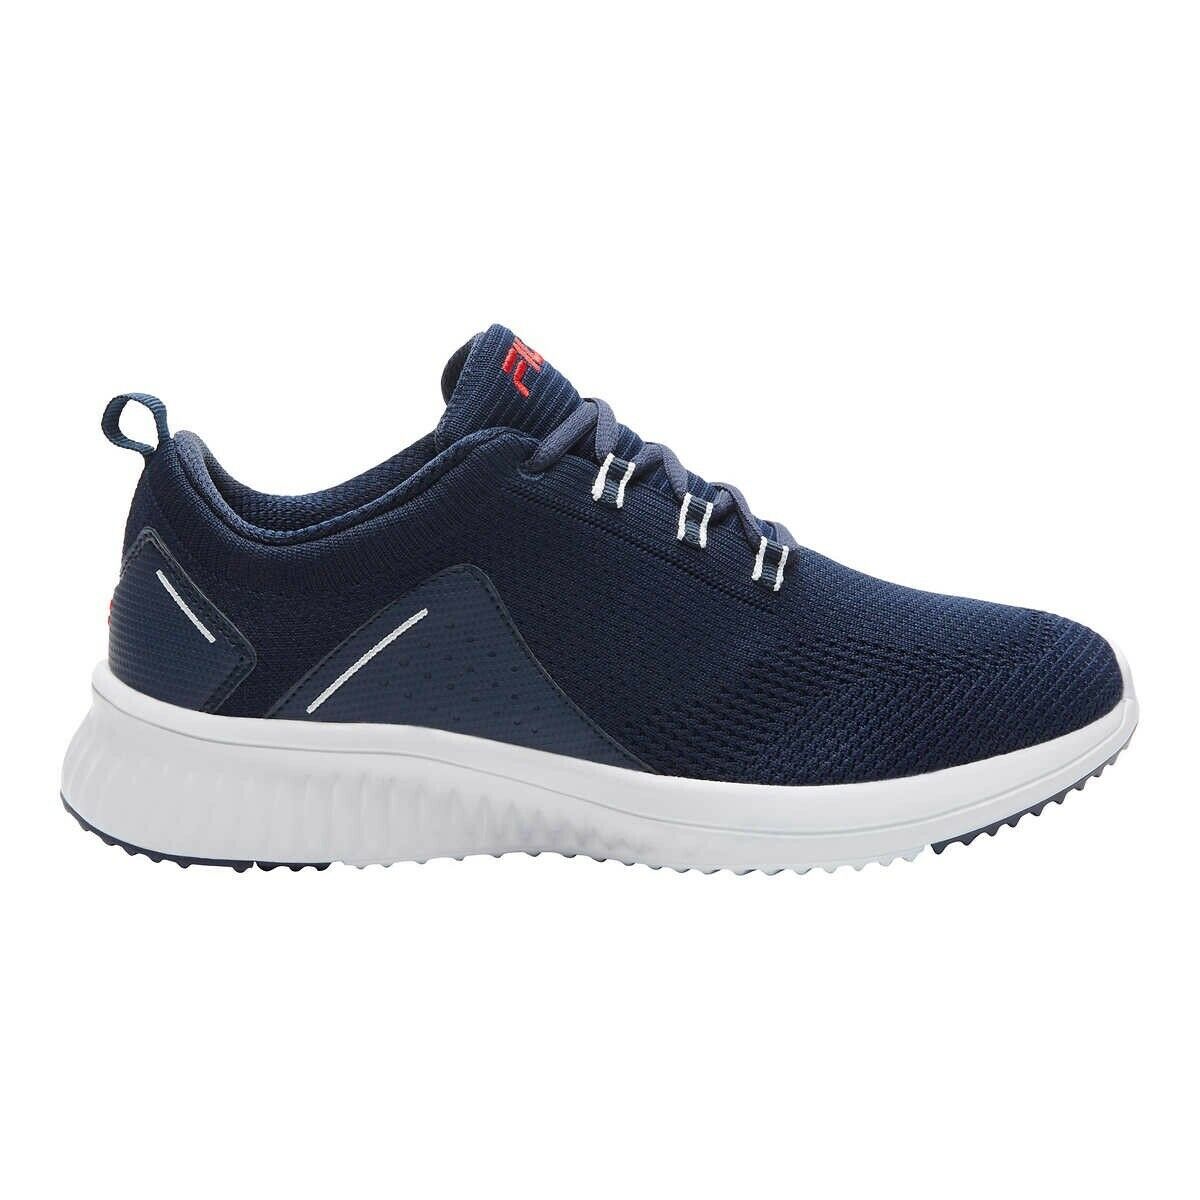 Fila Men's Athletic Running Tennis Shoes / Sneakers - Grey or Navy | eBay